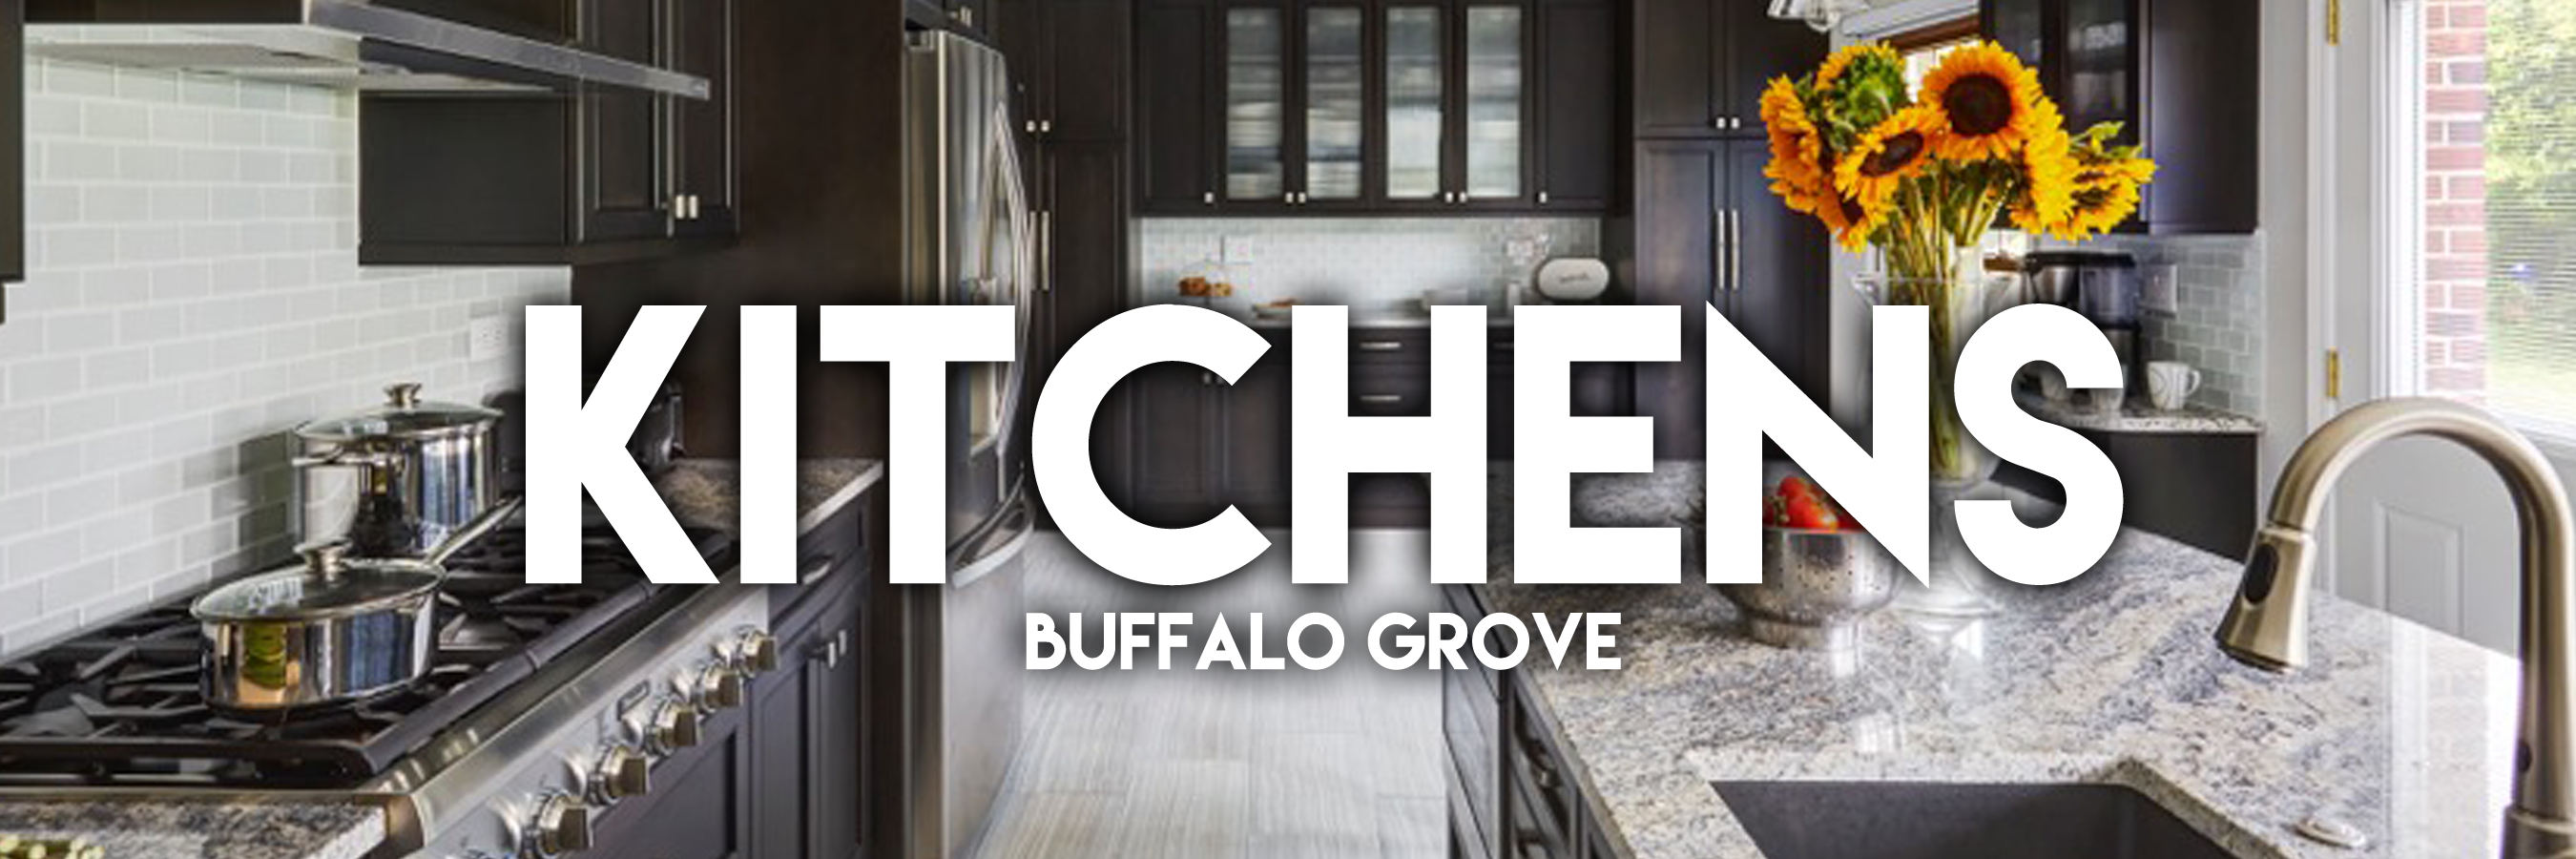 Kitchen buffalo grove | Kitchen Village